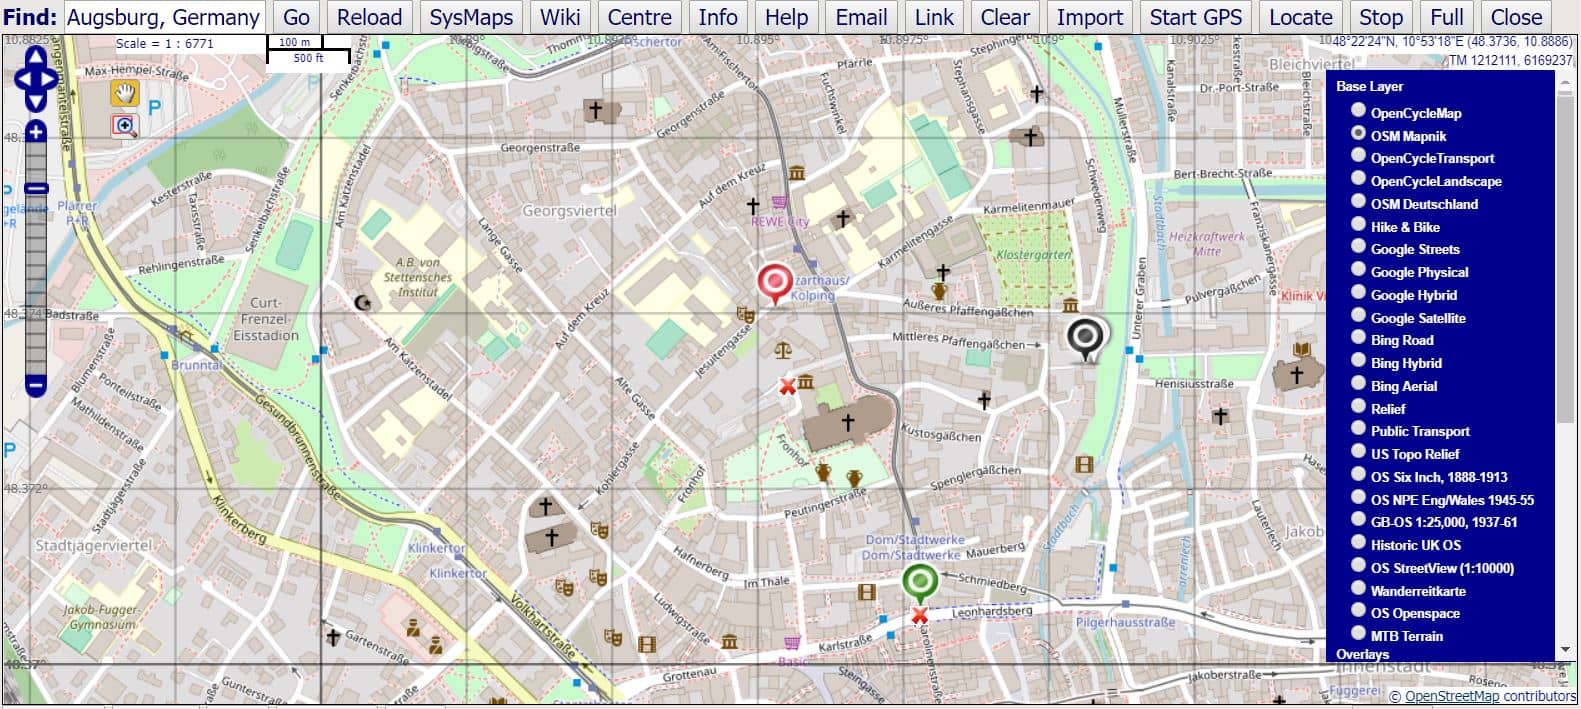 OpenStreetMap / Google / Bing Examples